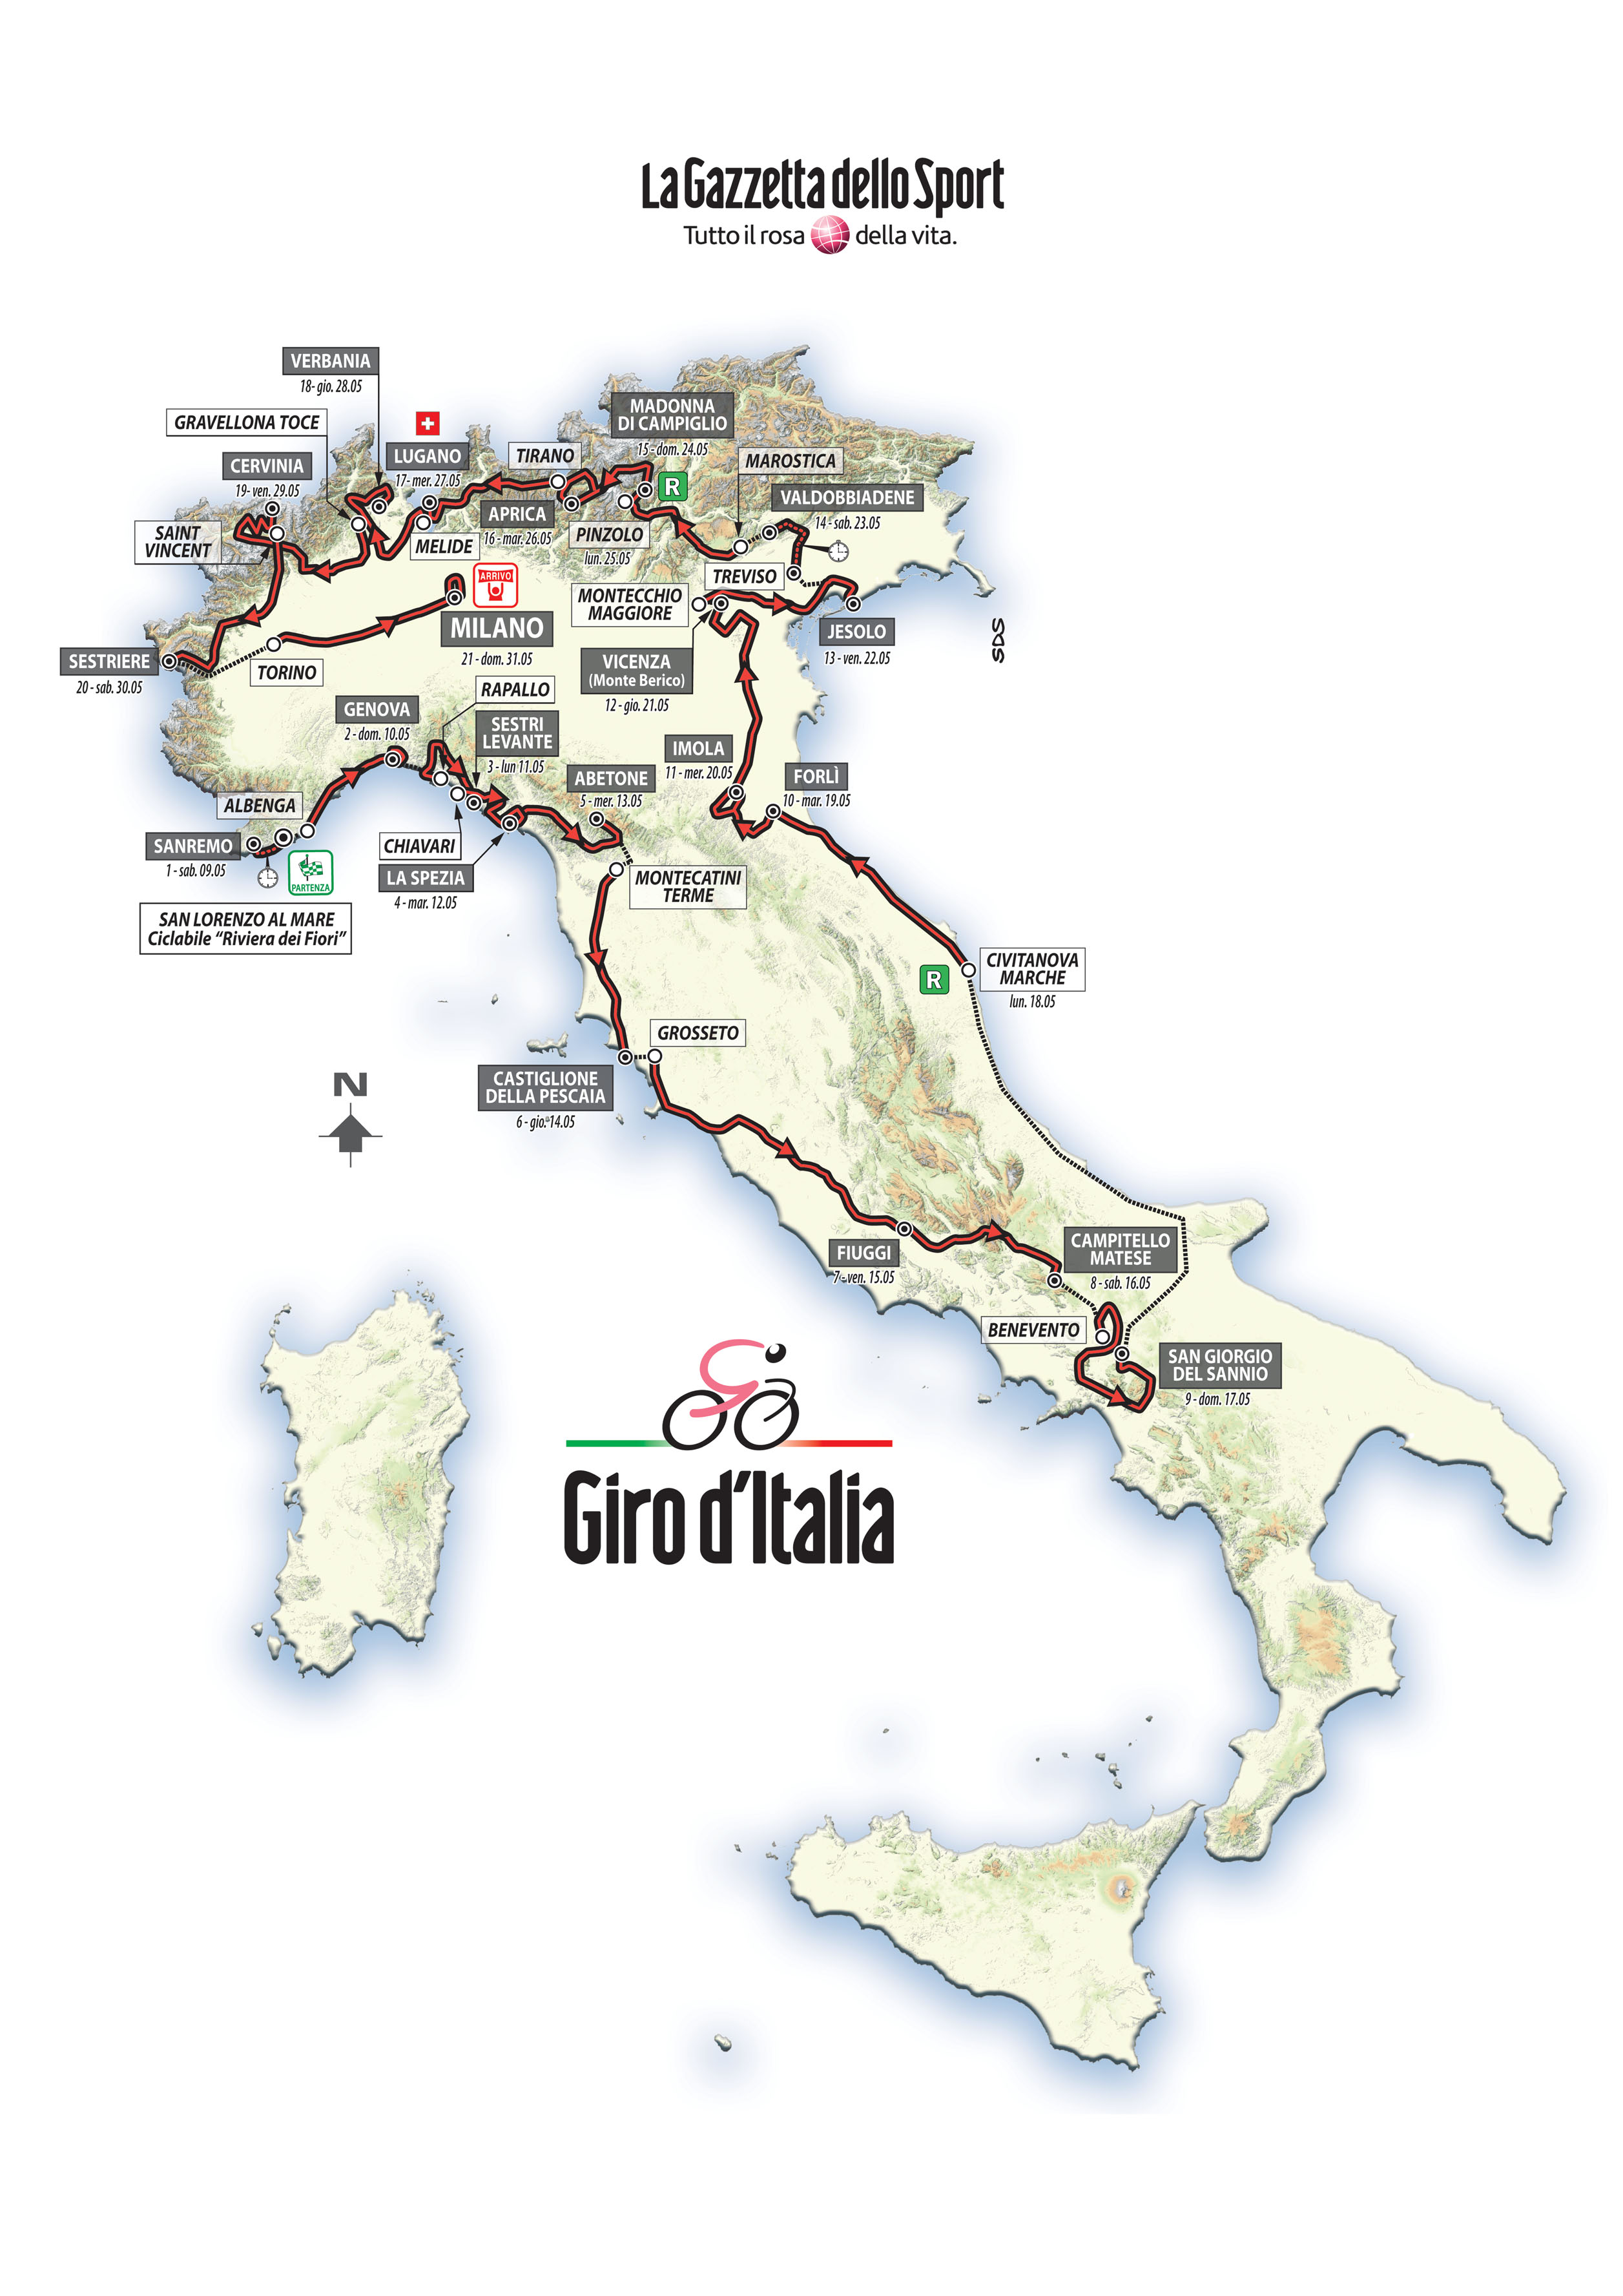 Giro 2015 etapy